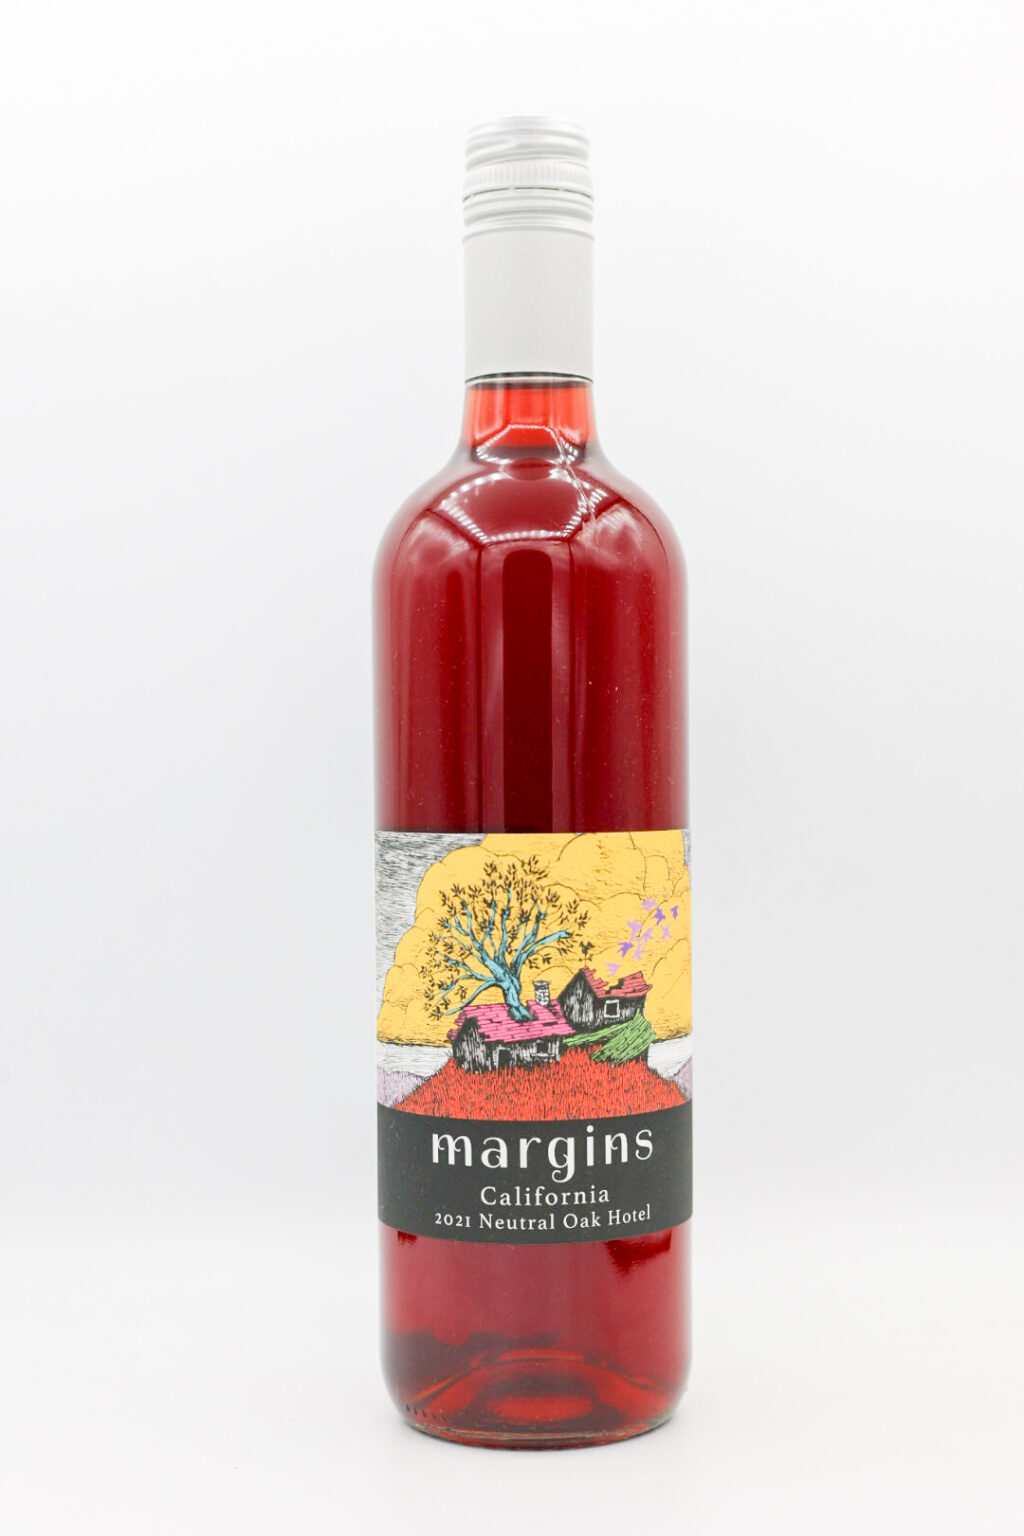 Margins Wine Neutral Oak Hotel California Red 2021